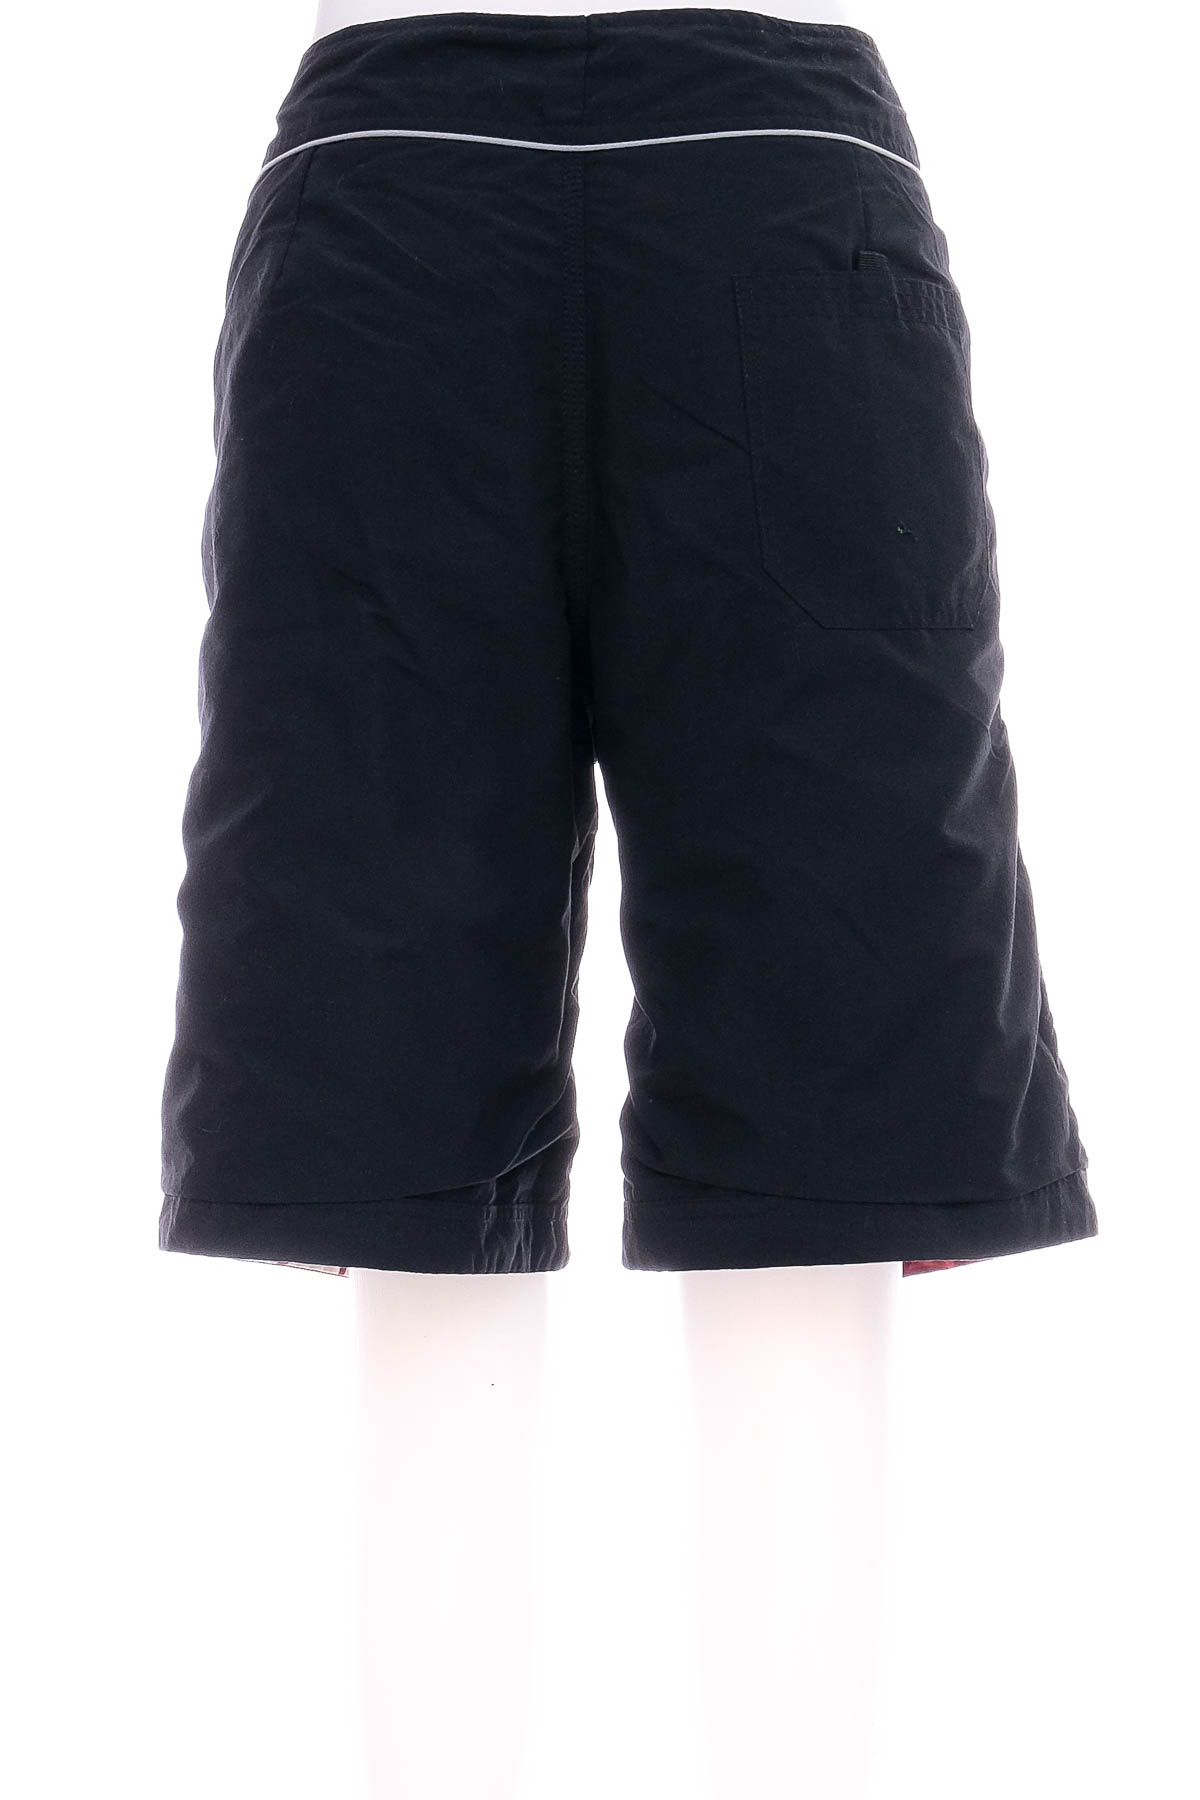 Pantaloni scurți bărbați reversibil - CHAI AREE - 3